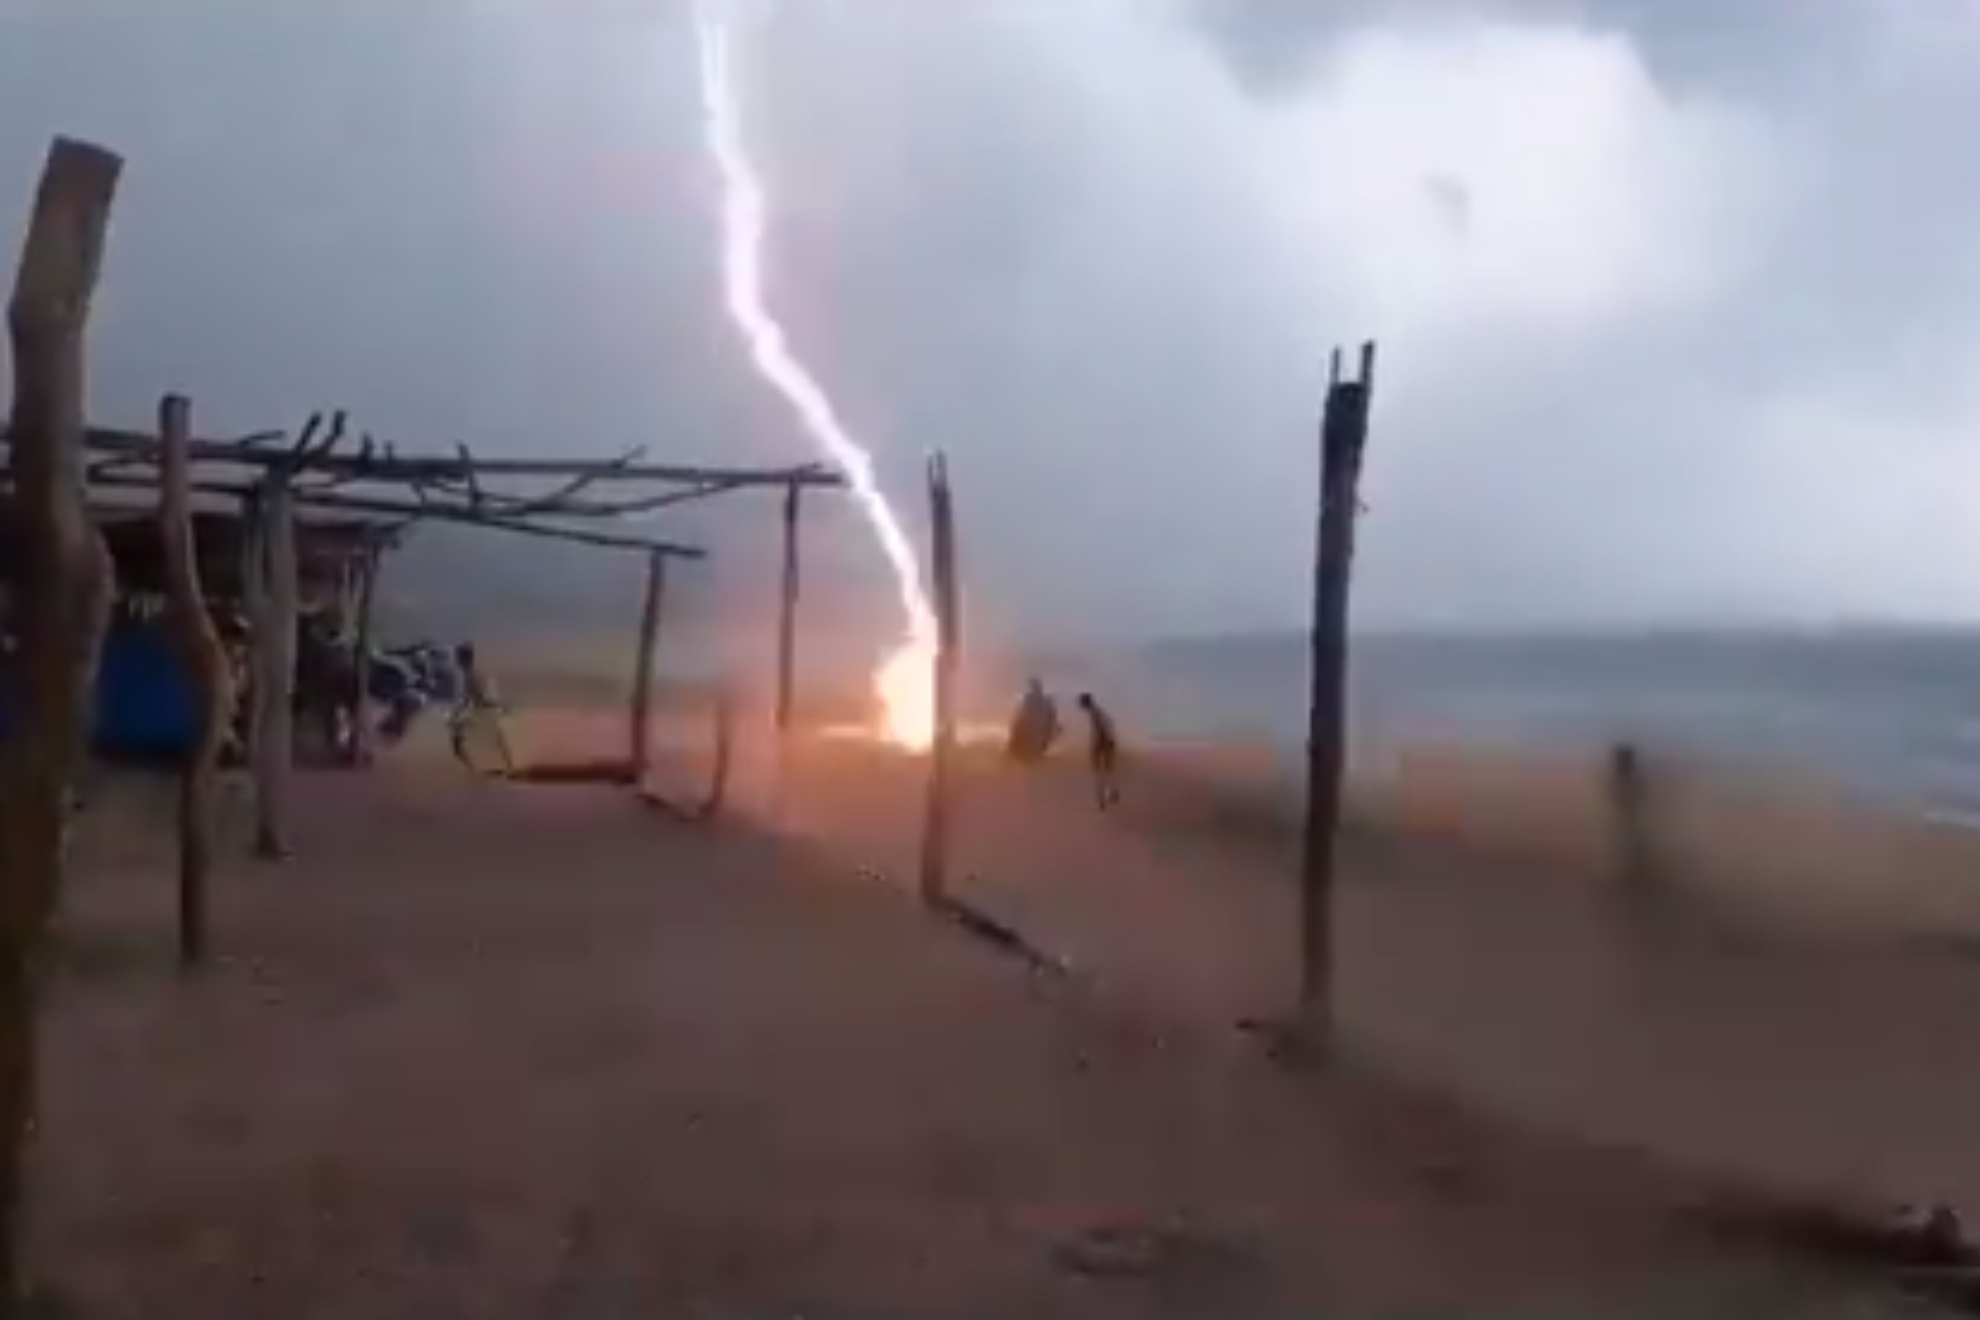 Brutal lightning strike kills two people on Mexican beach